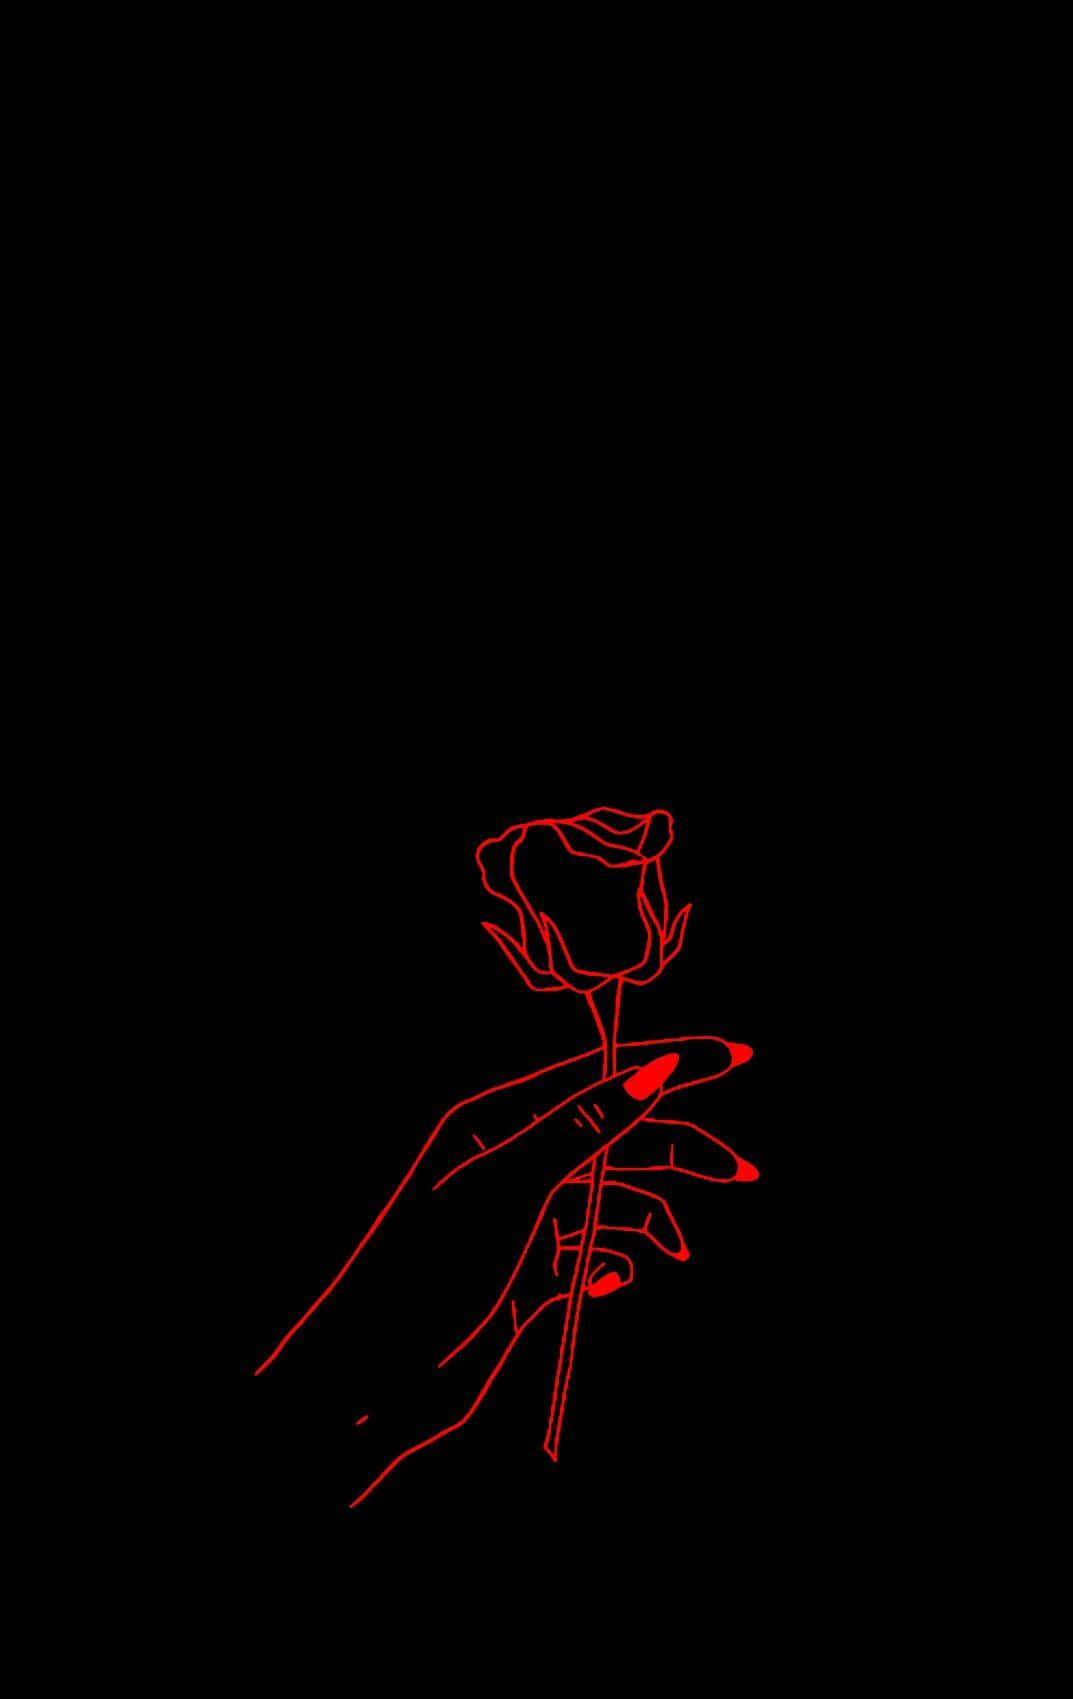 Dark Red Aesthetic Hand Holding A Rose Wallpaper